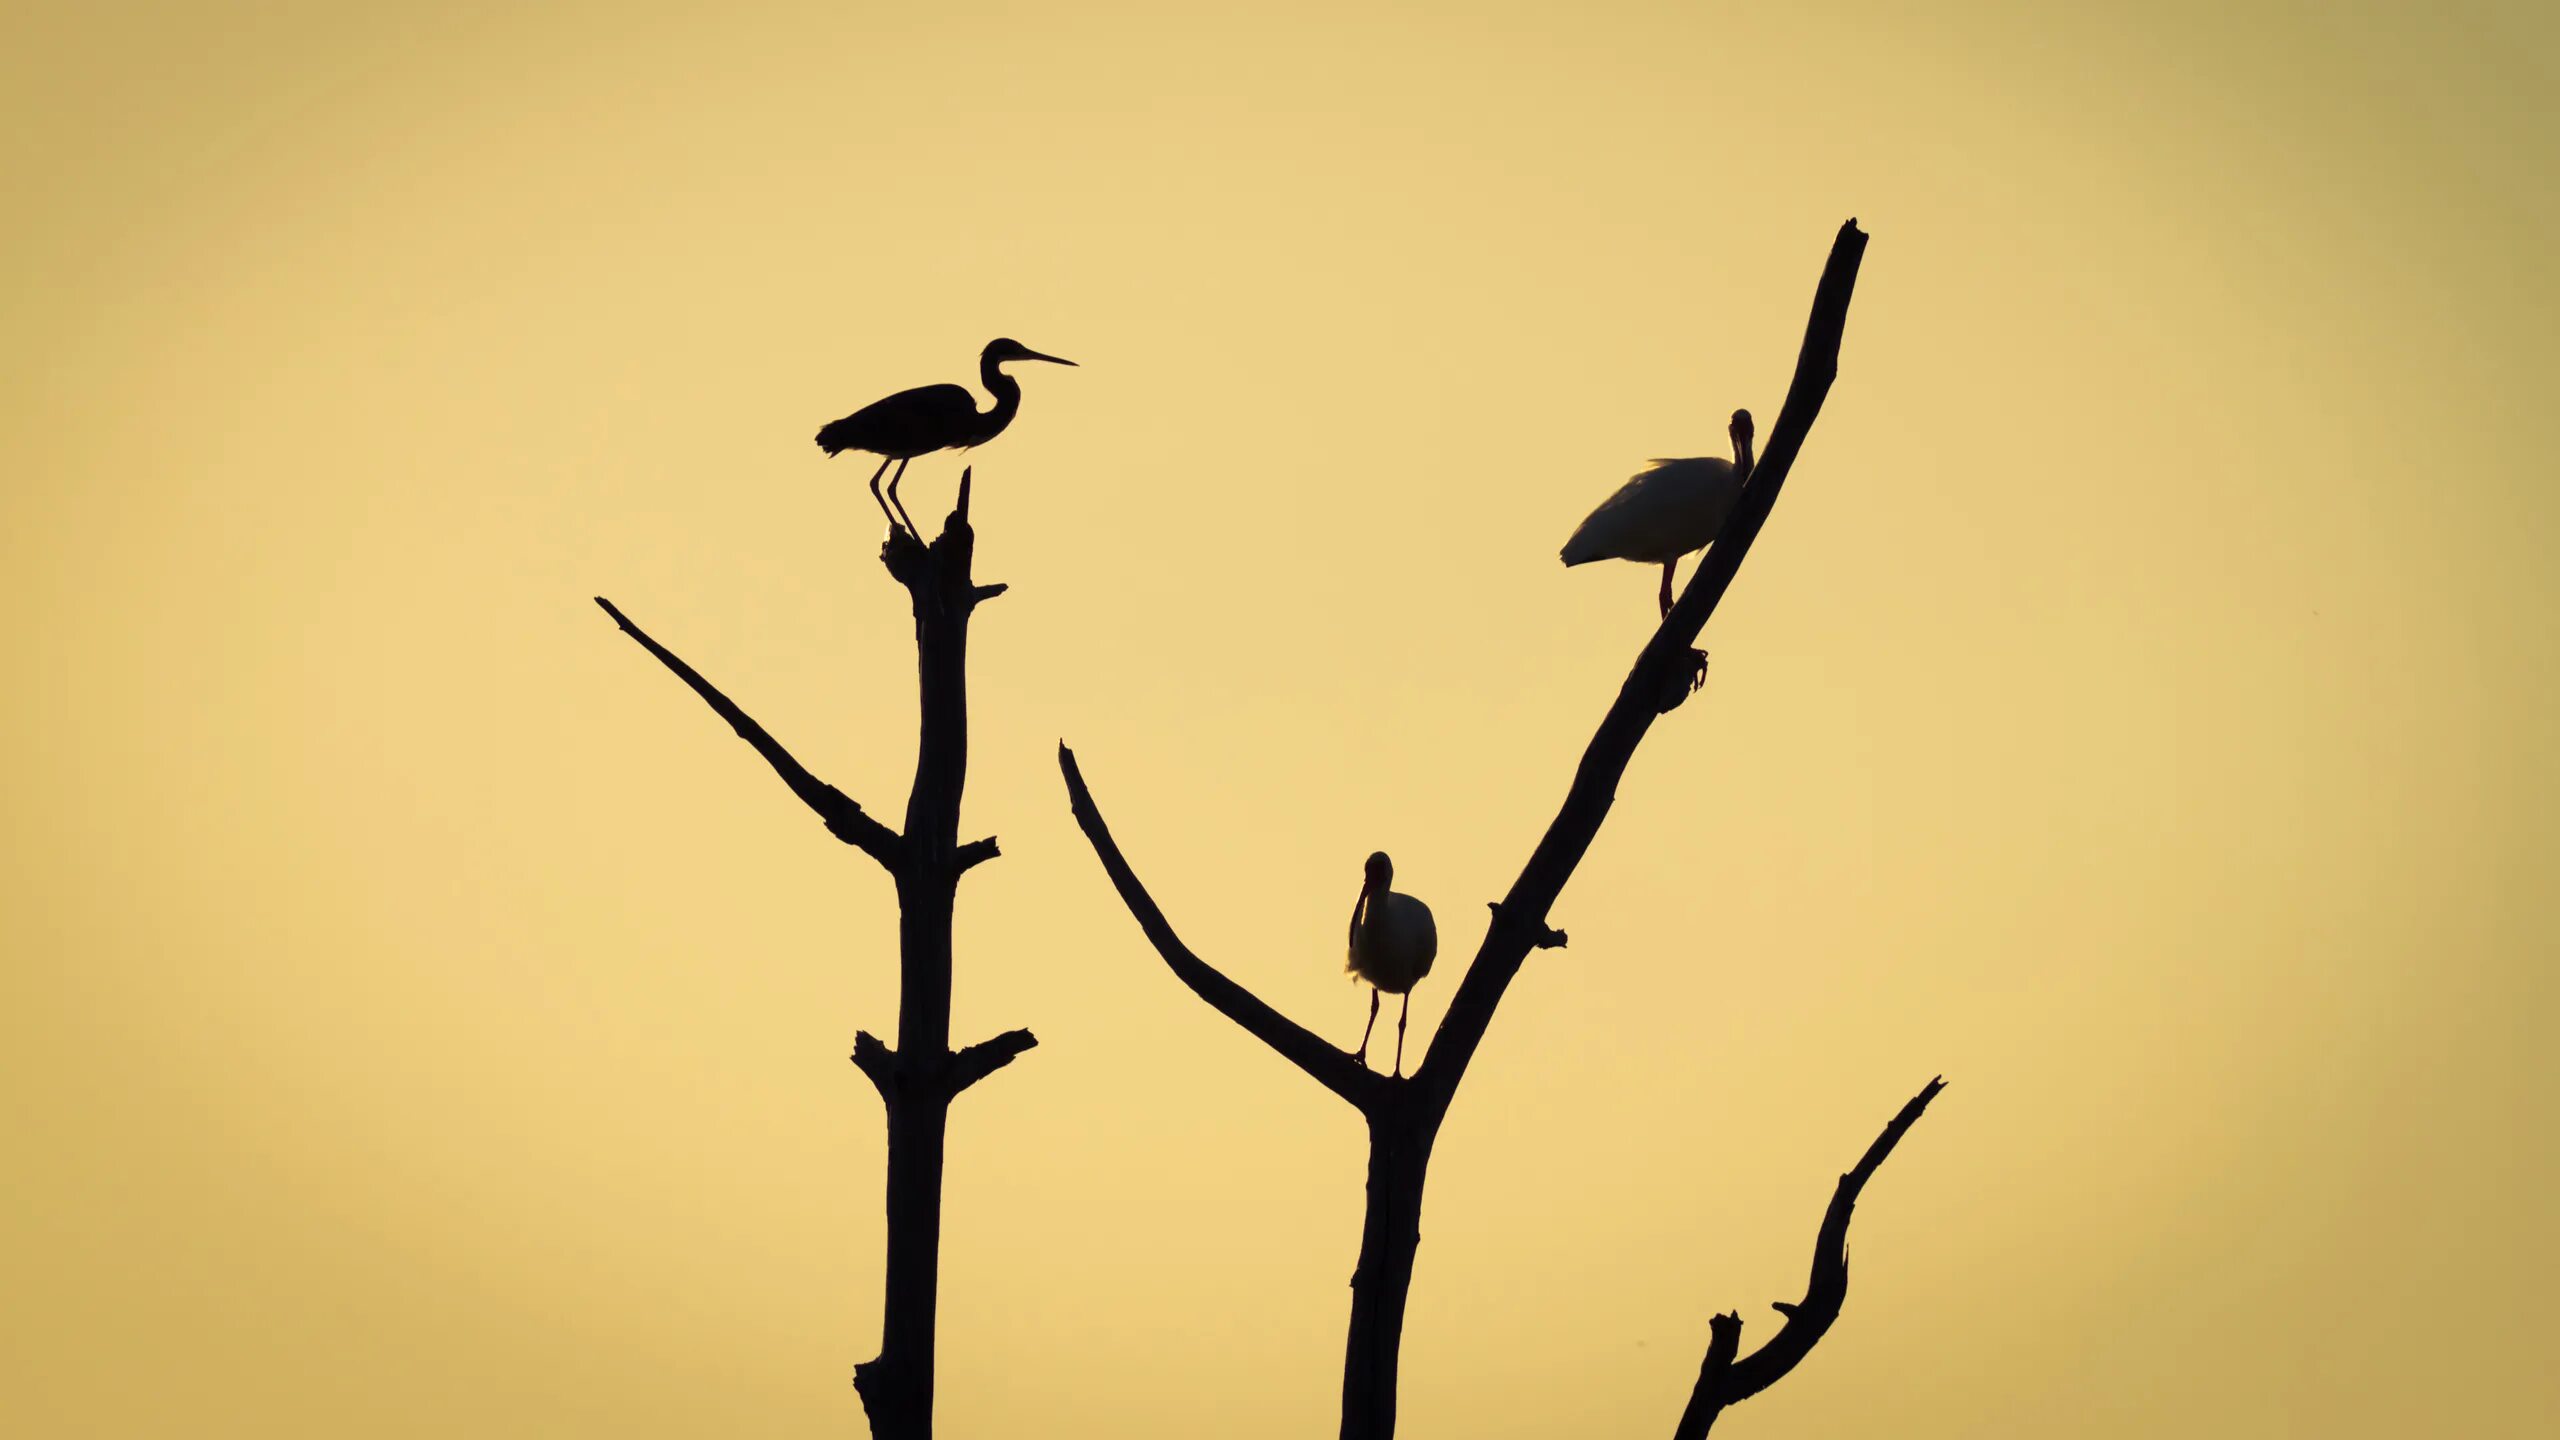 Птицы дерево начинающему. Птичка на ветке. Птицы на дереве. Силуэт дерева с птицами. Птица Минимализм.